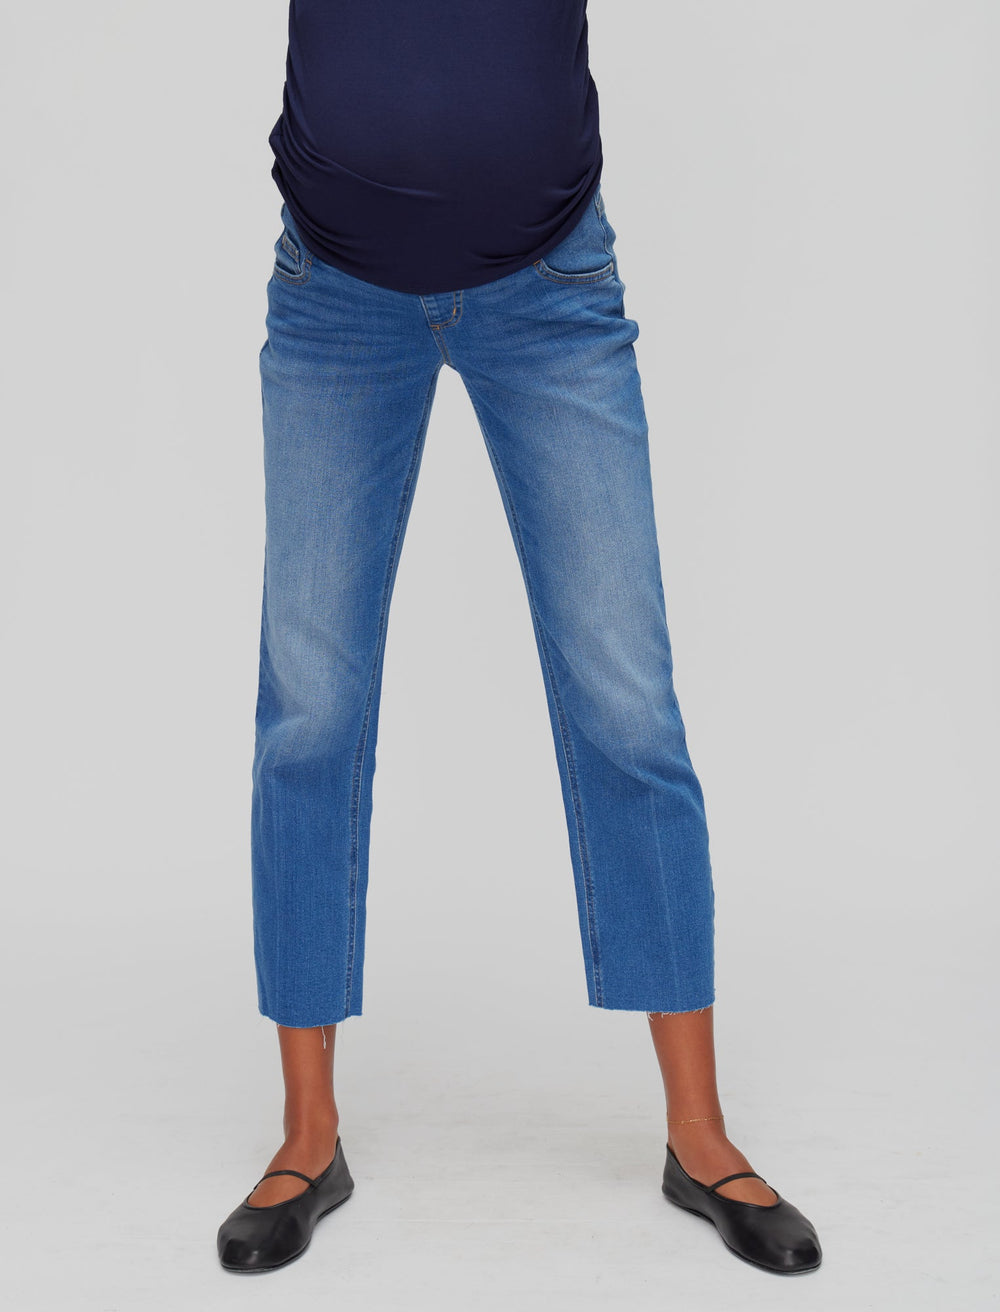 Light Blue Jeans - Skinny, Slim Straight & Maternity Jeans